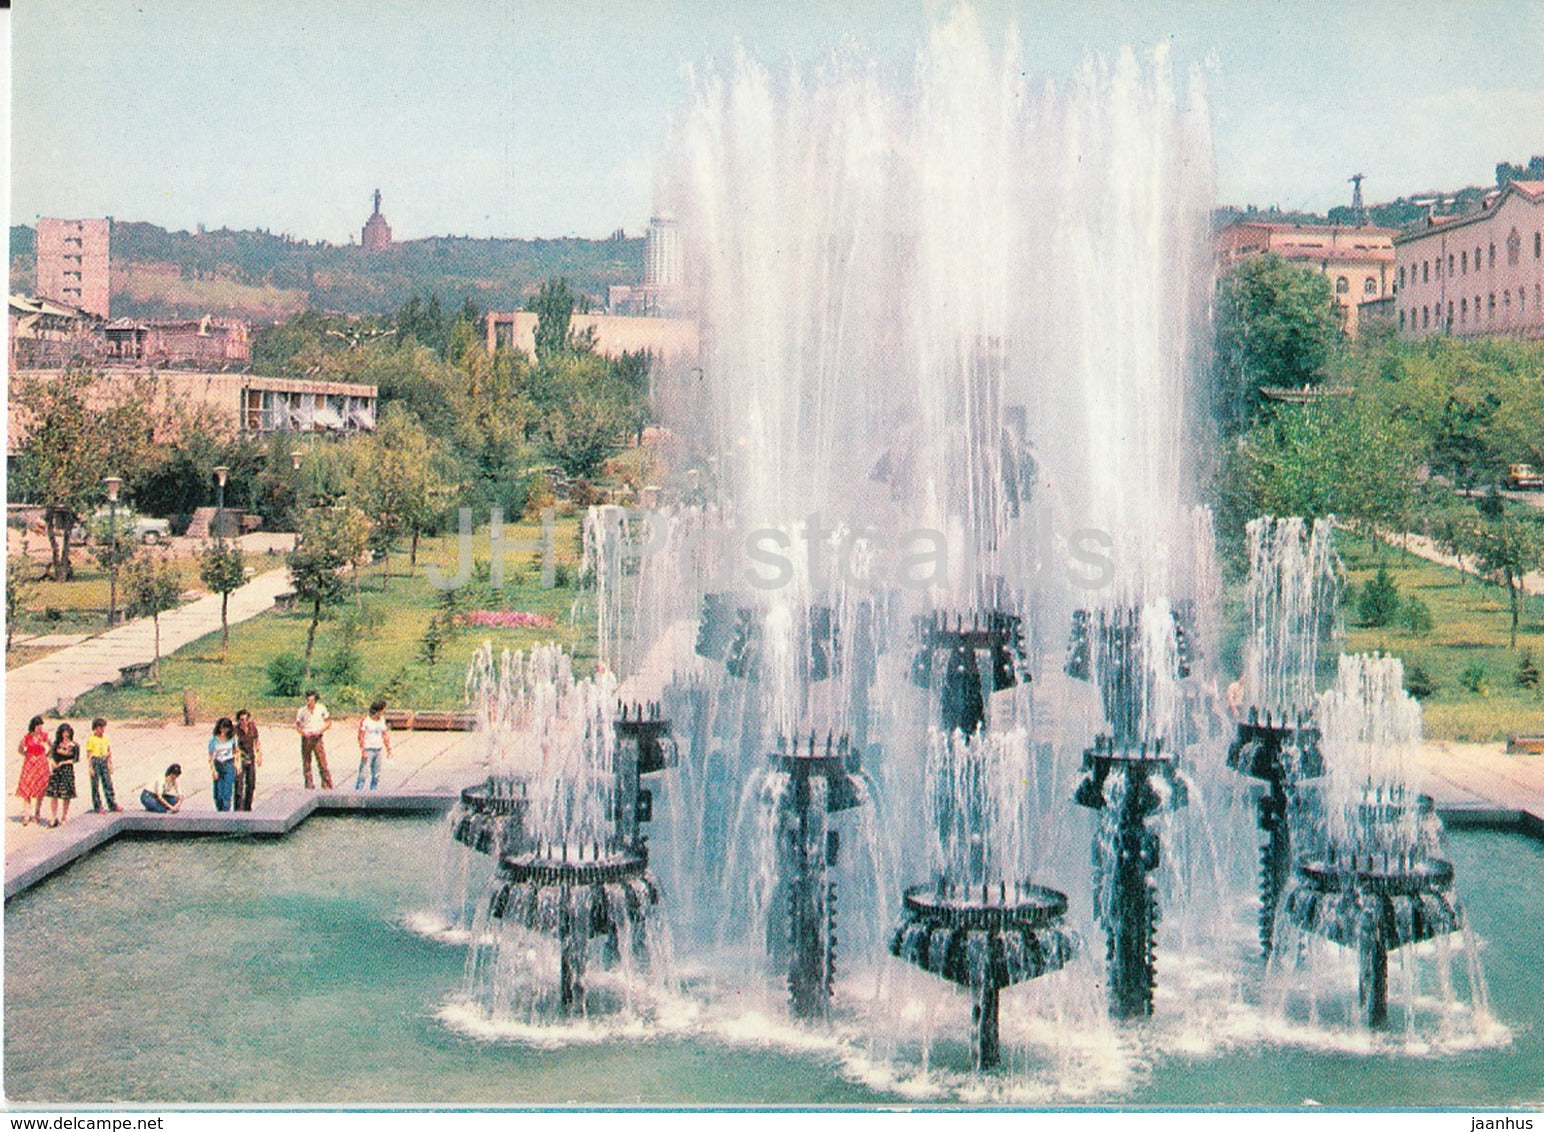 Yerevan - ring boulevard fountain - 1981 - Armenia USSR -  unused - JH Postcards